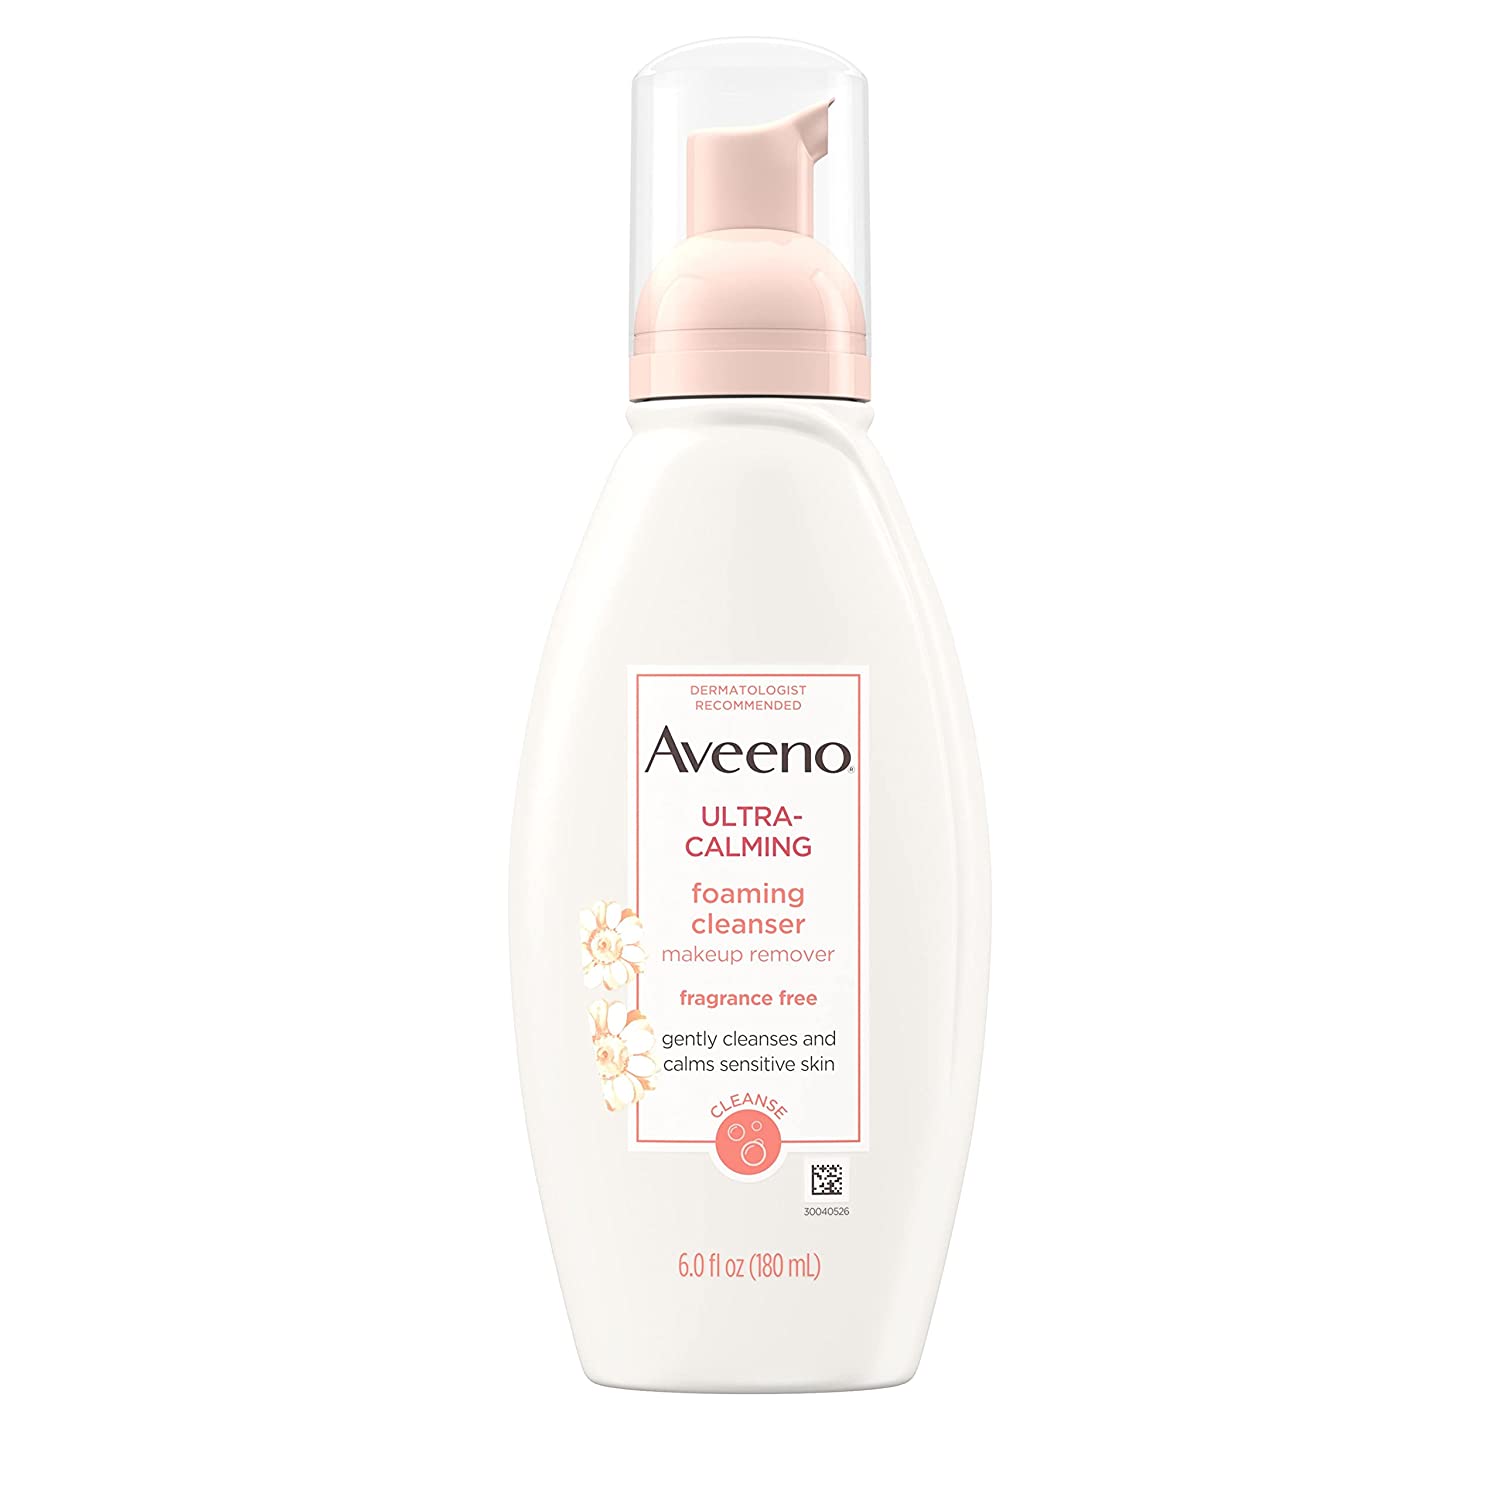 Aveeno Ultra-Calming Makeup Remover & Foam Cleanser